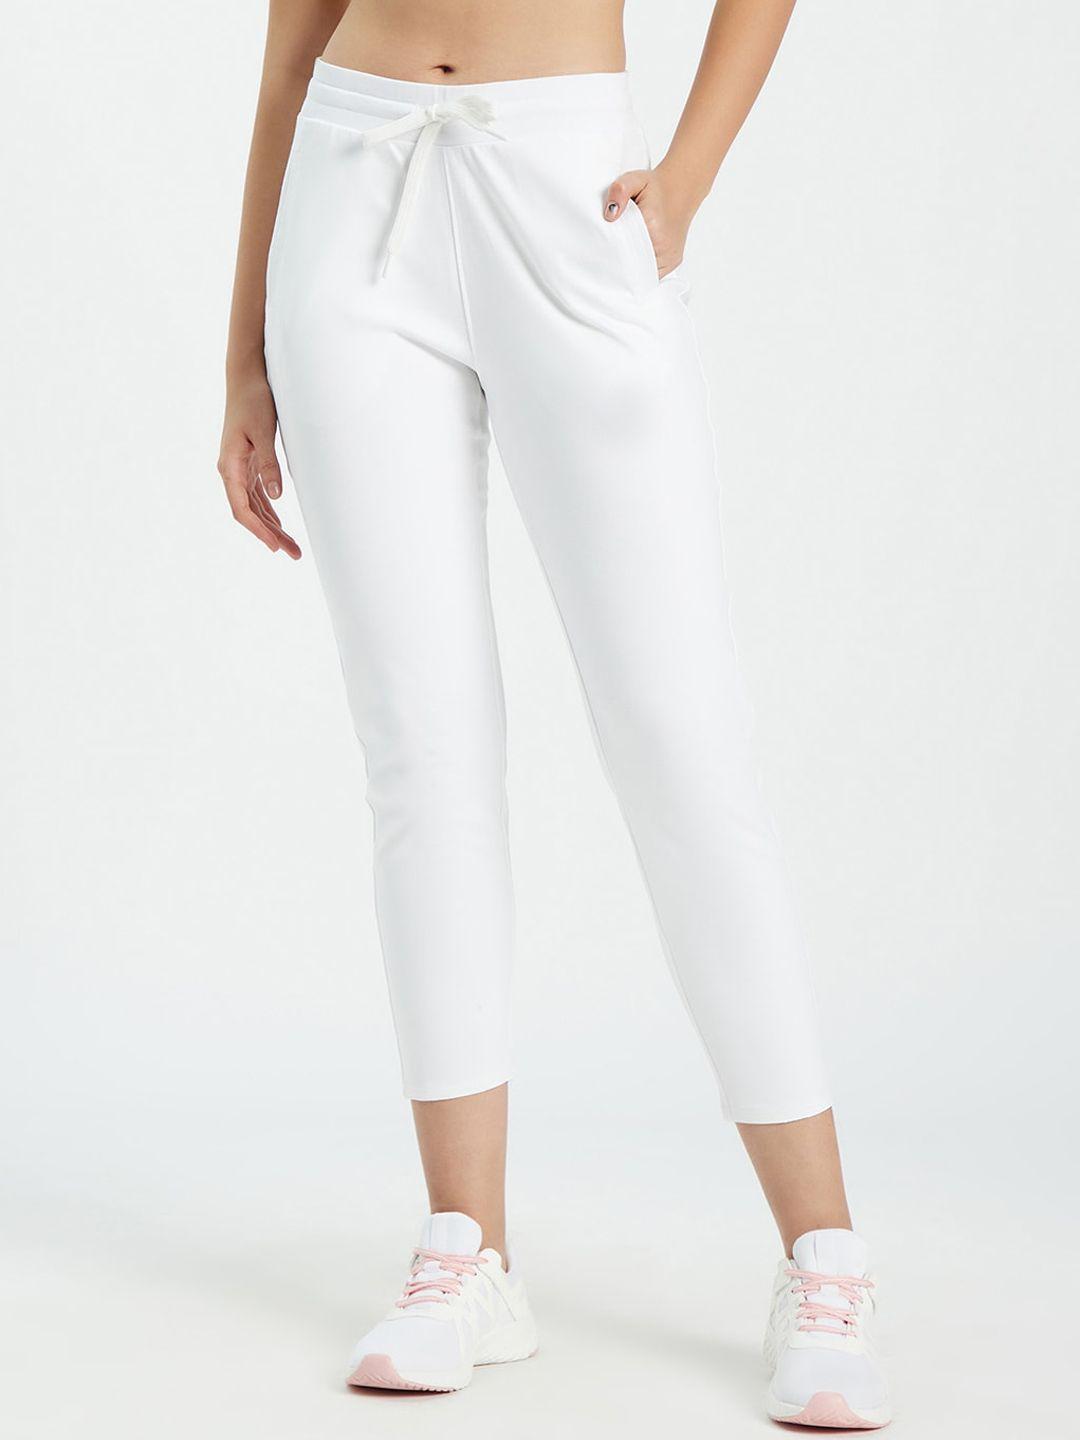 edrio-women-white-solid-cotton-track-pants